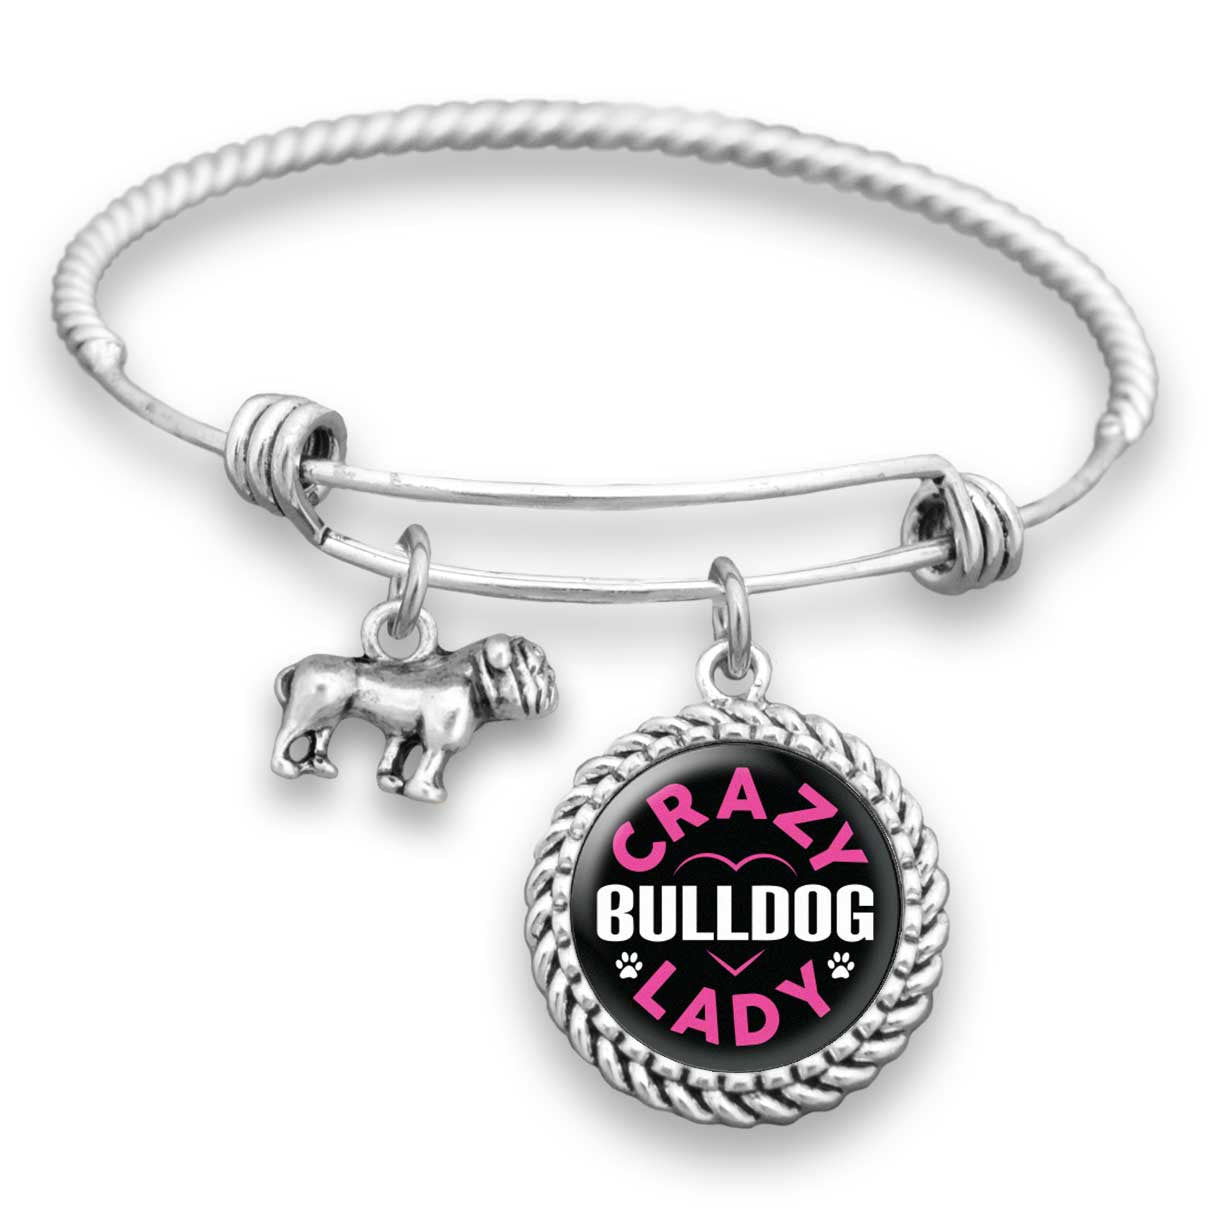 Crazy Bulldog Lady Funny Charm Bracelet